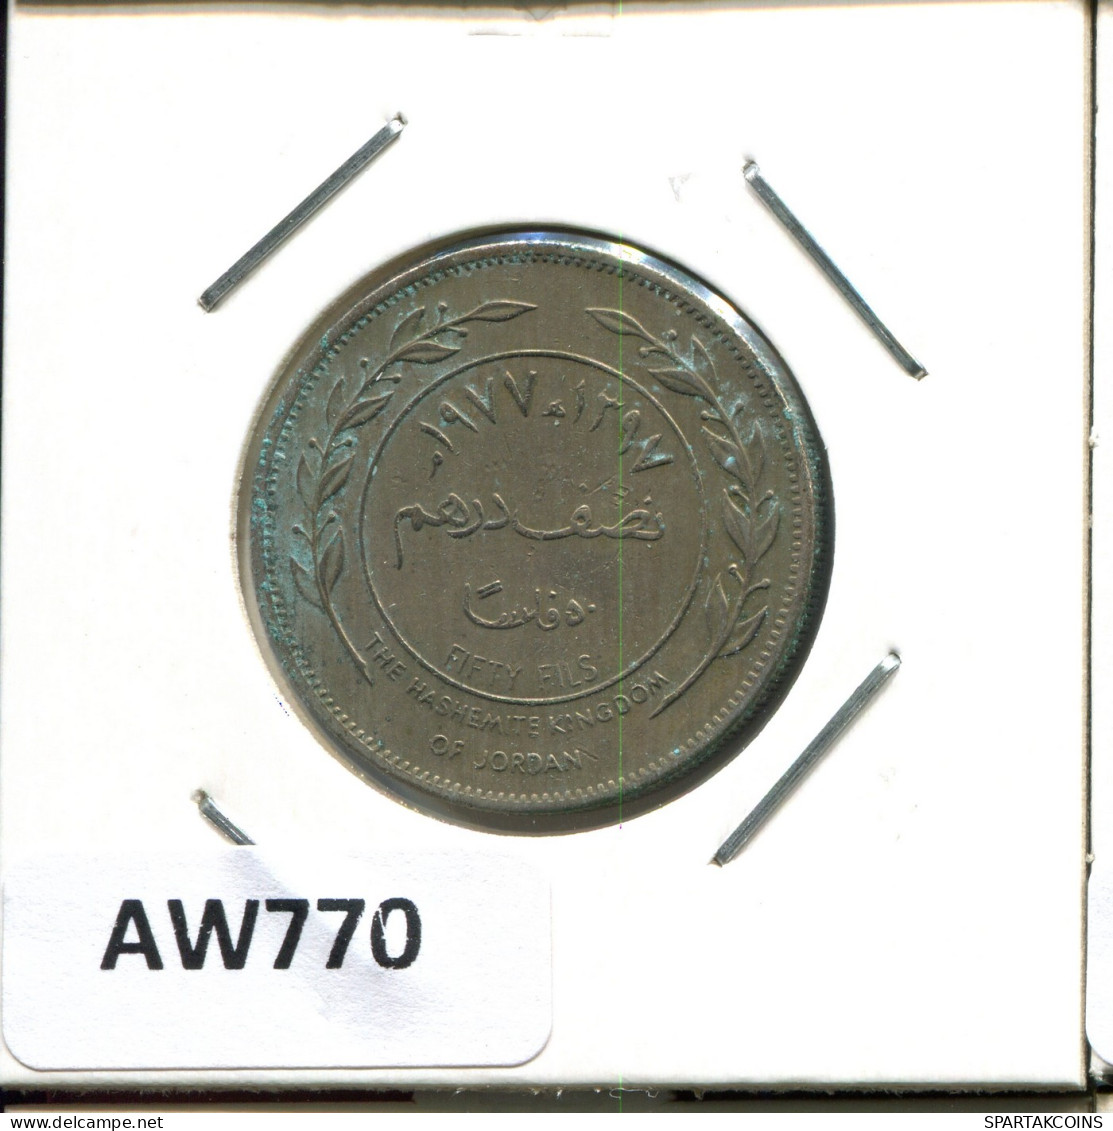 50 FILS 1977 JORDAN Islamic Coin #AW770.U - Jordan